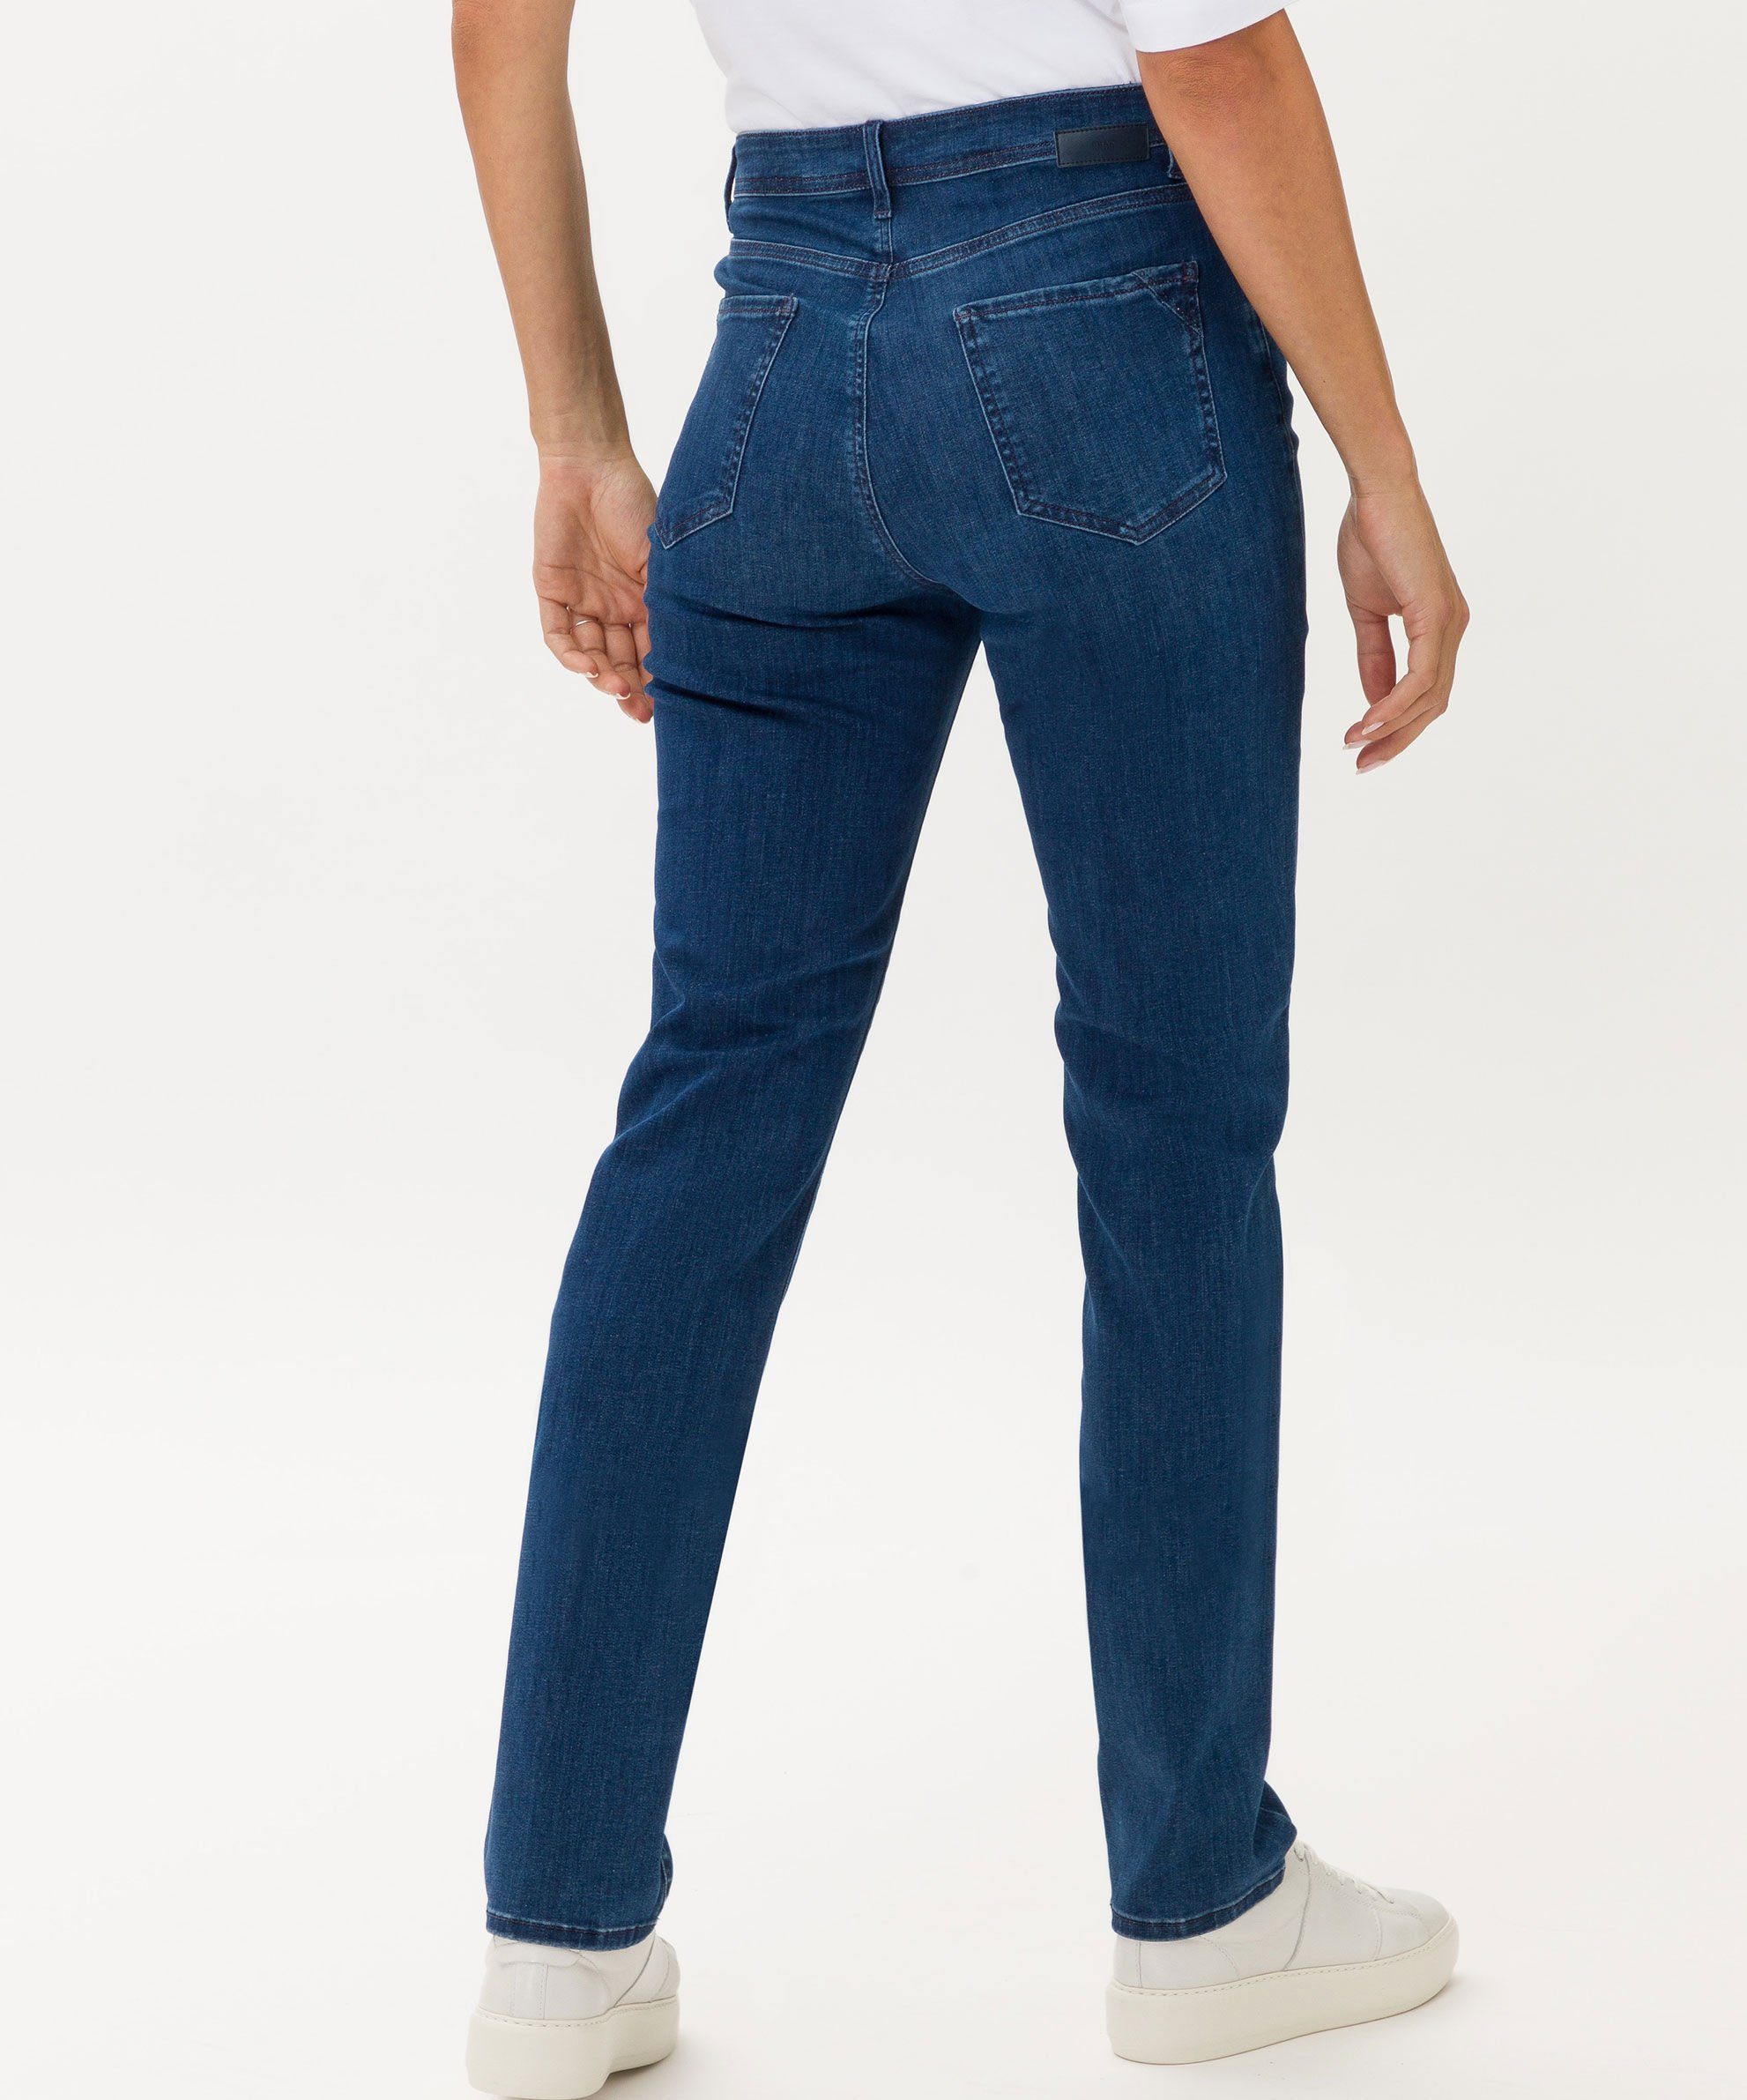 regular gepflegtem Style 5-Pocket-Jeans in blue Brax used Five-Pocket-Jeans